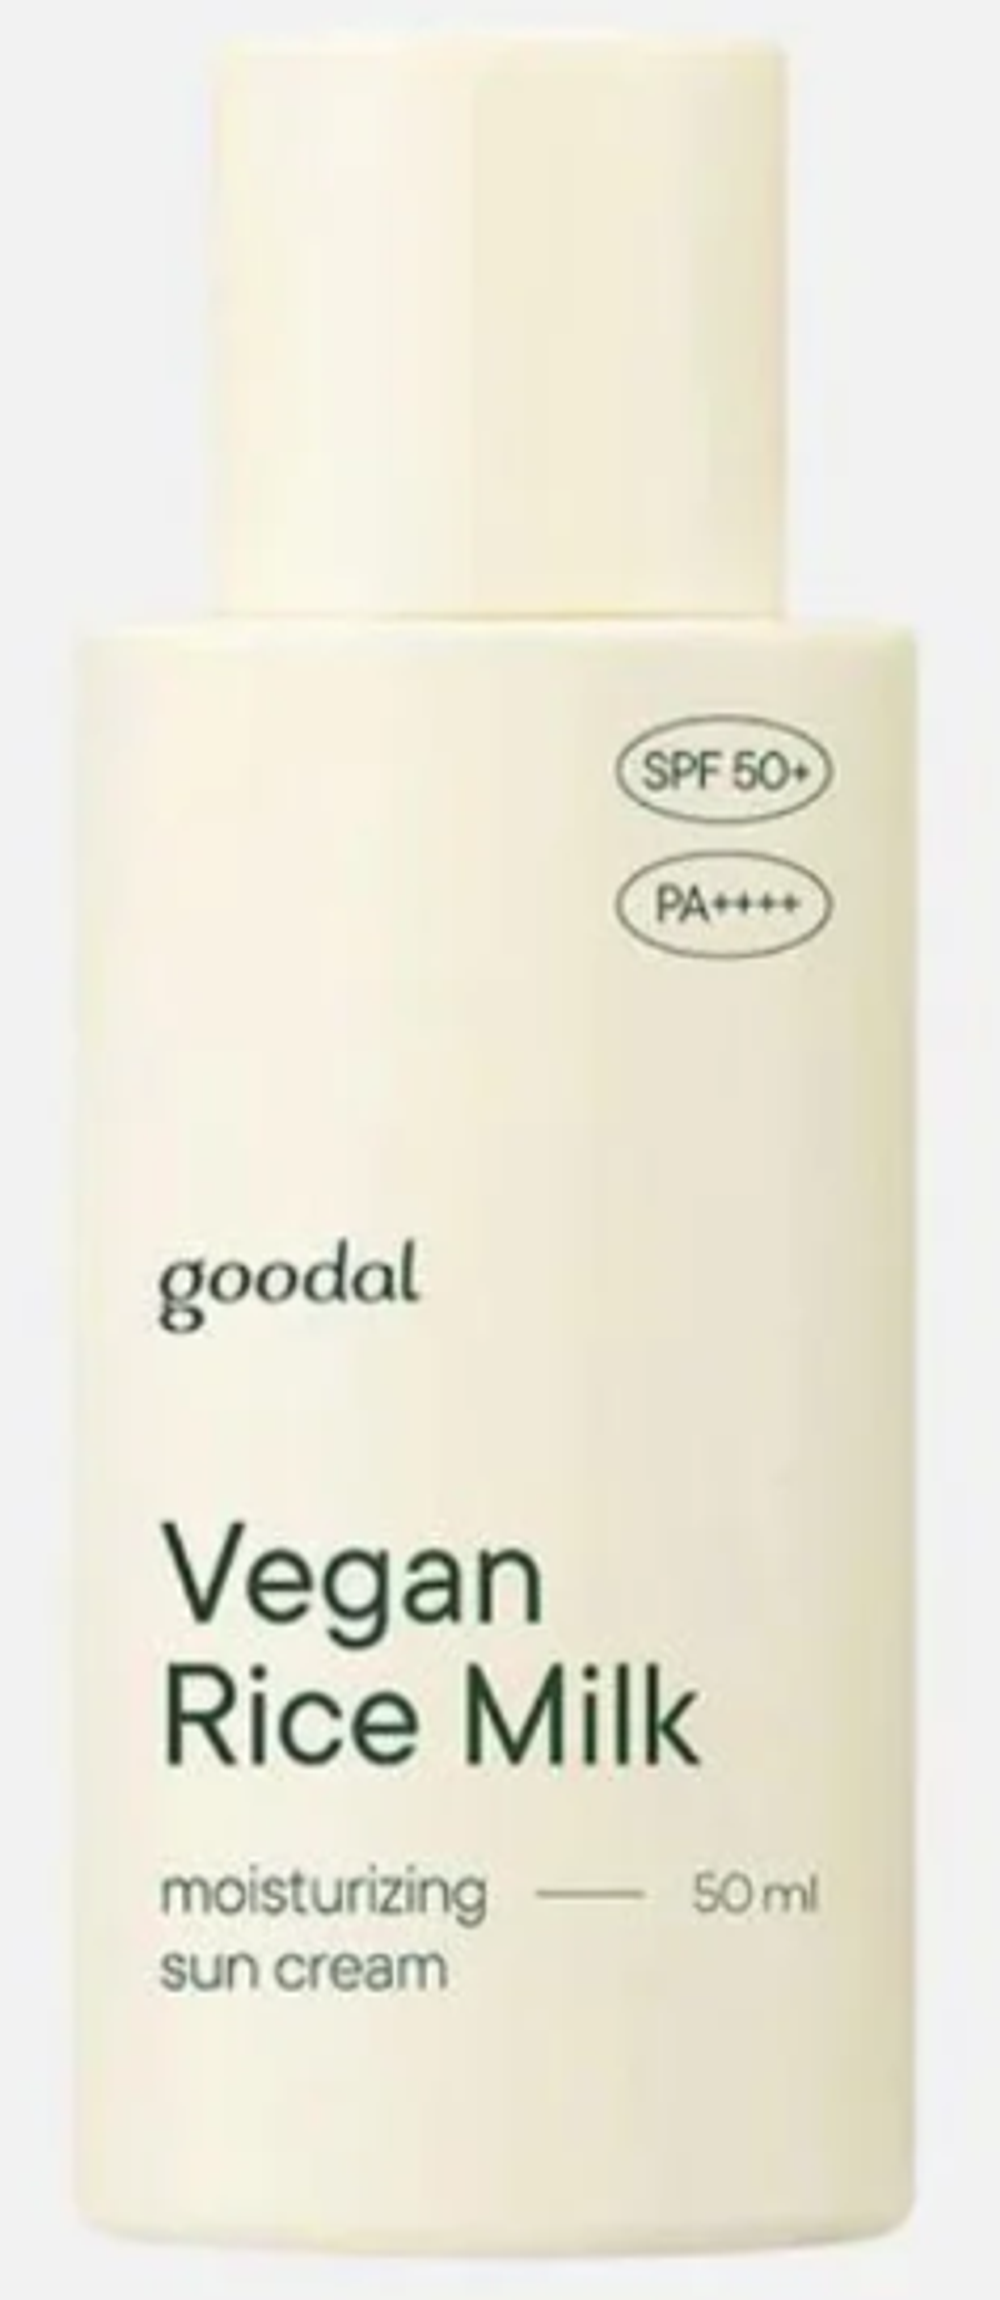 Goodal Vegan Rice Milk Moisturizing Sun Cream солнцезащитный крем SPF 50+ PA++++ 50мл